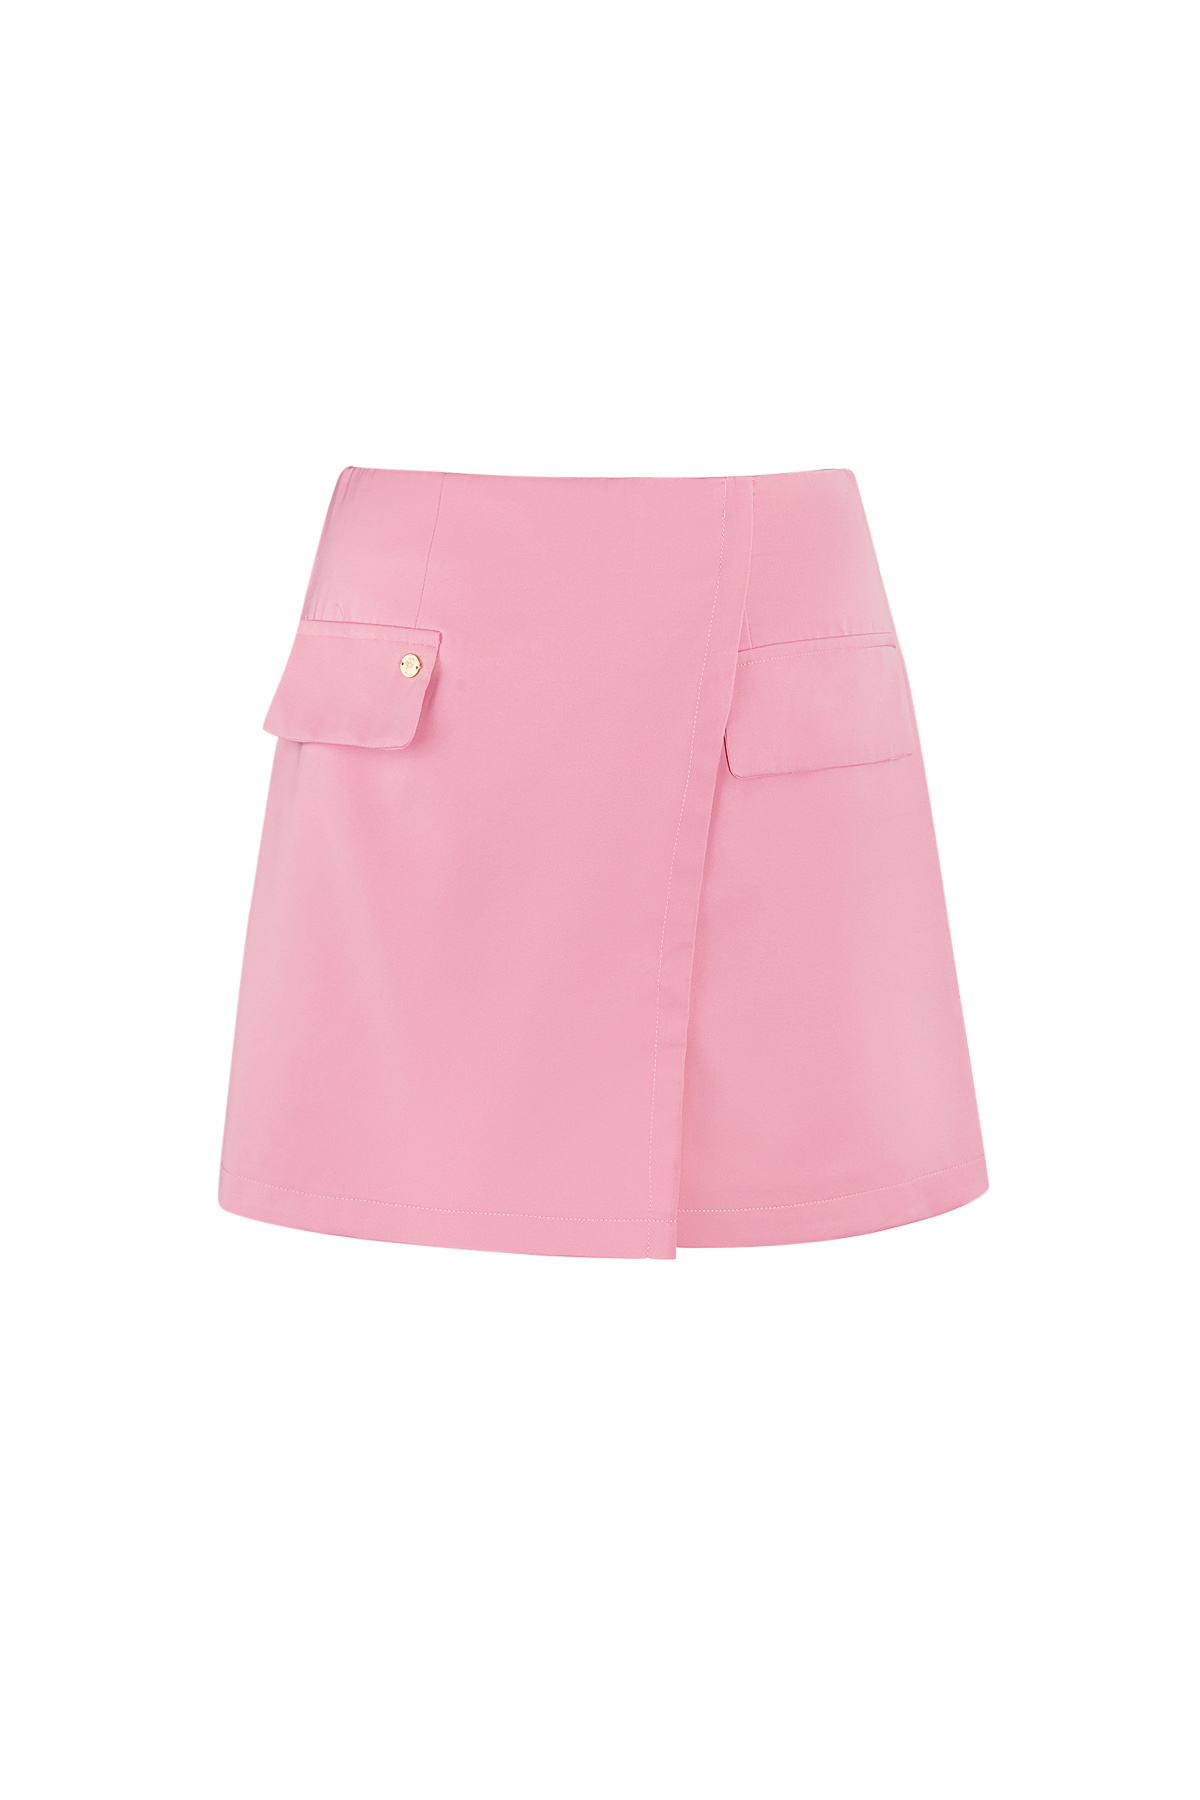 Plain pastel skirt - pink